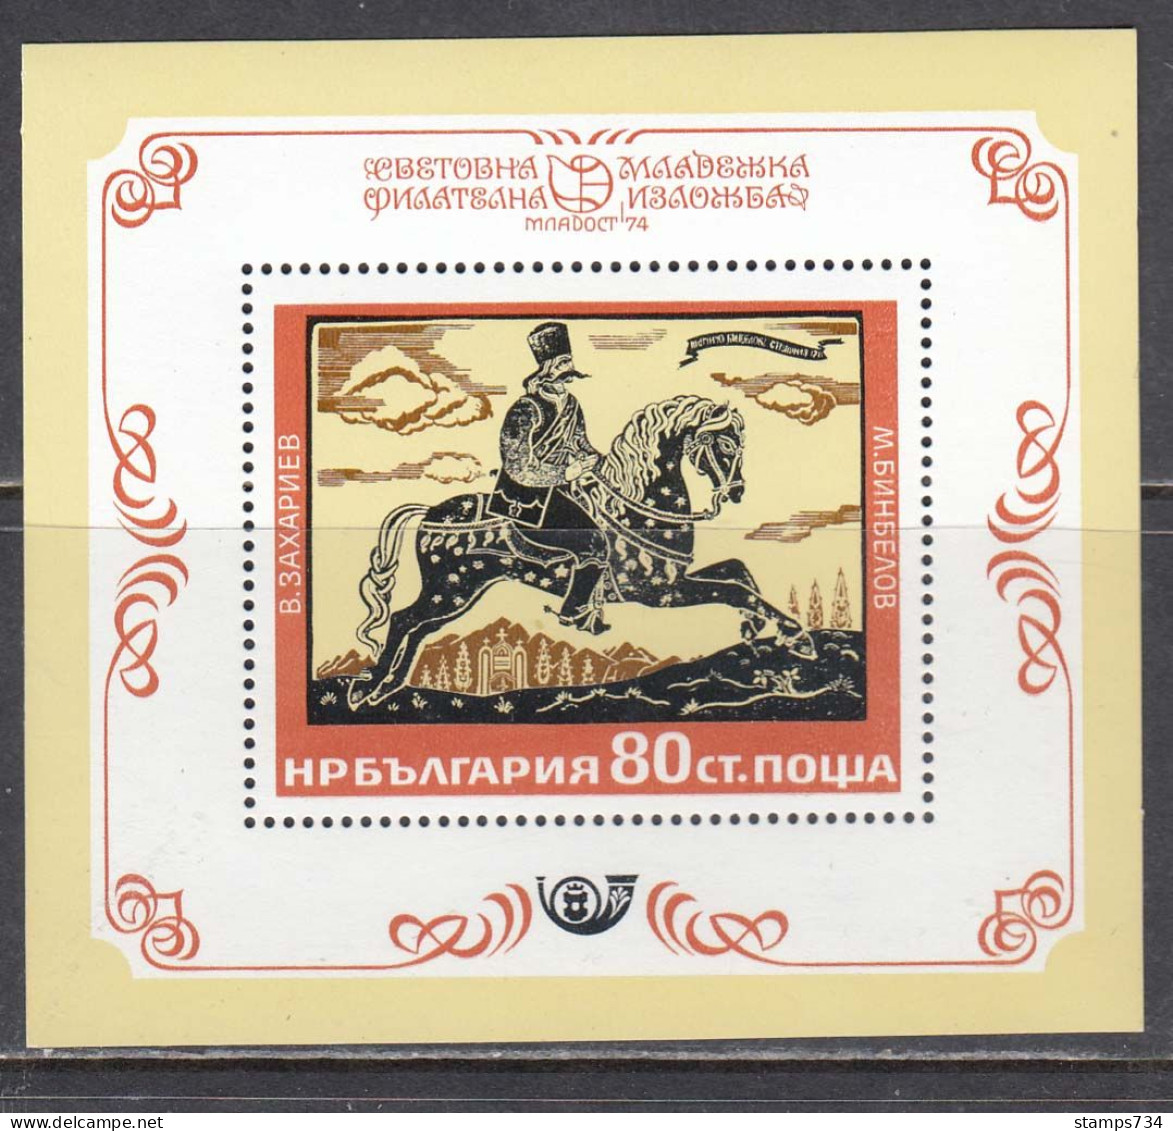 Bulgaria 1974 - Stamp Exhibition Jugend'74, Mi-Nr. Block 49, MNH** - Unused Stamps